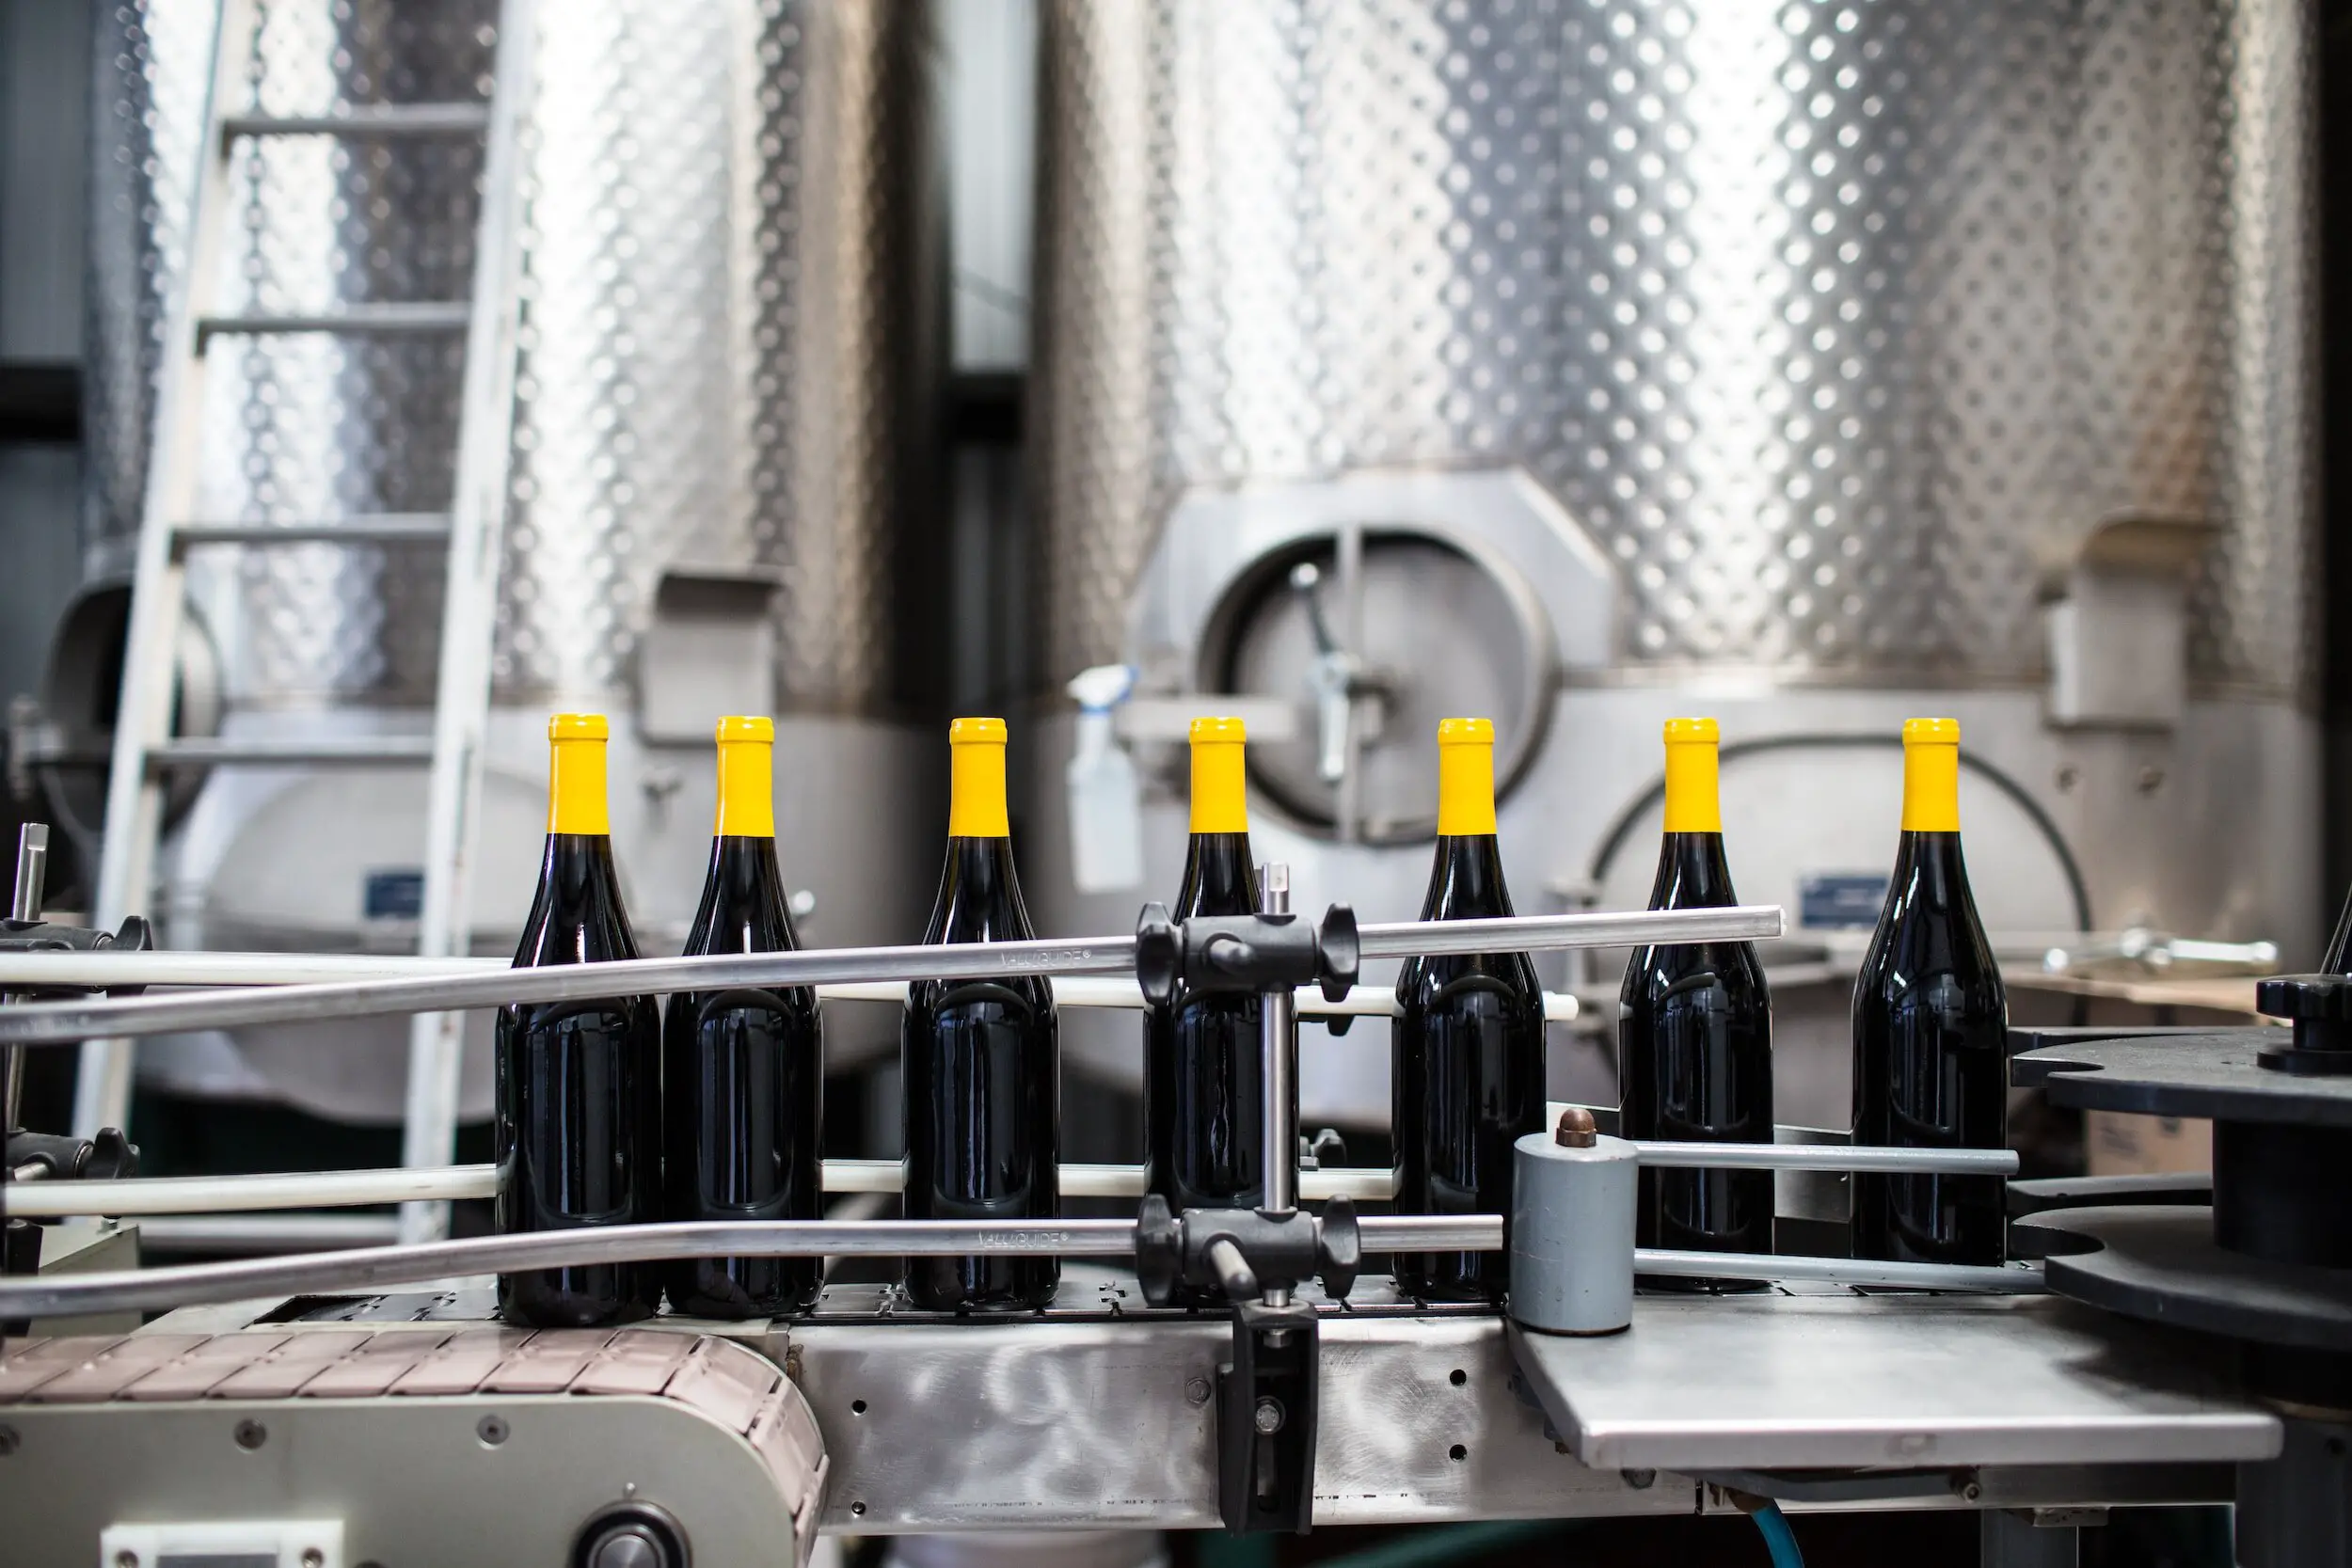 tempranillo vs Merlot- wine bottles in winery